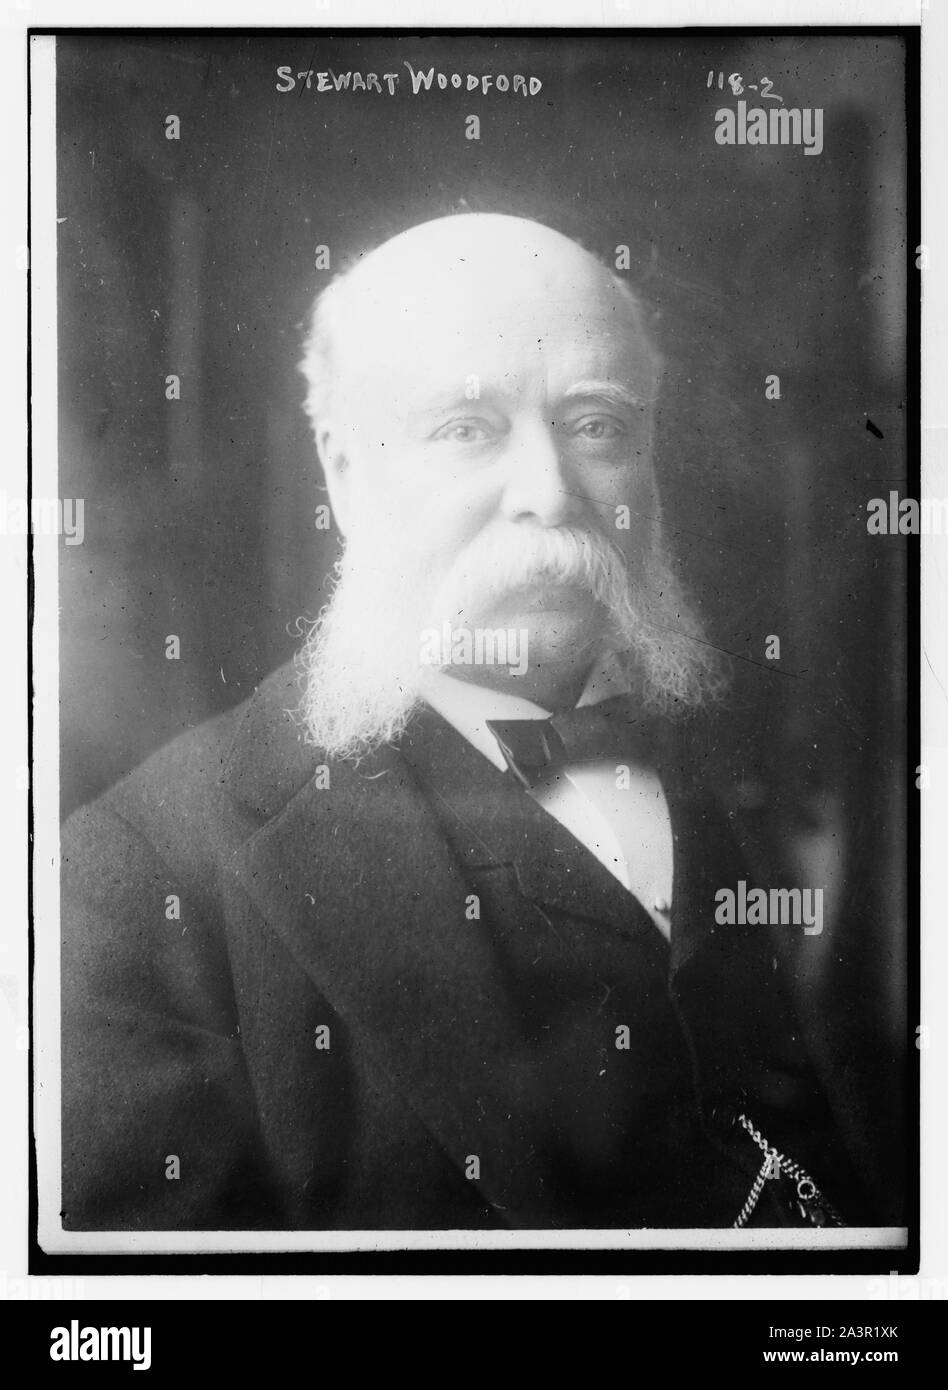 Stewart Woodford, portrait bust Stock Photo